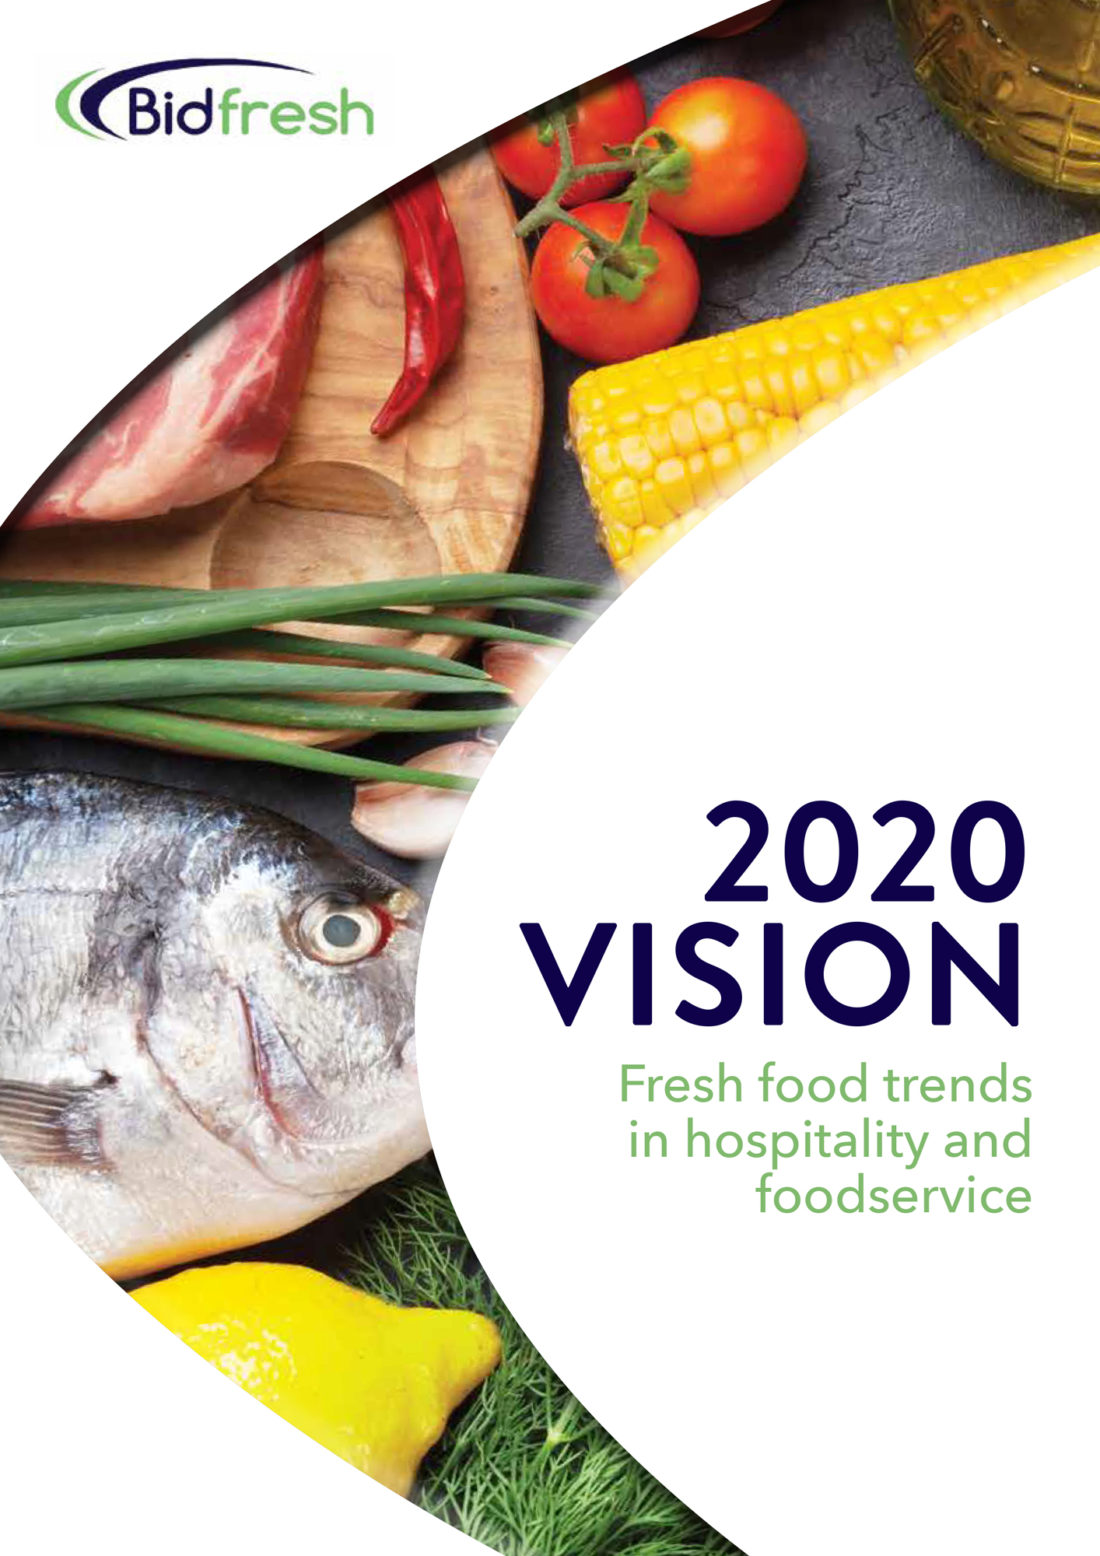 Bidfresh – 2020 Vision cover image